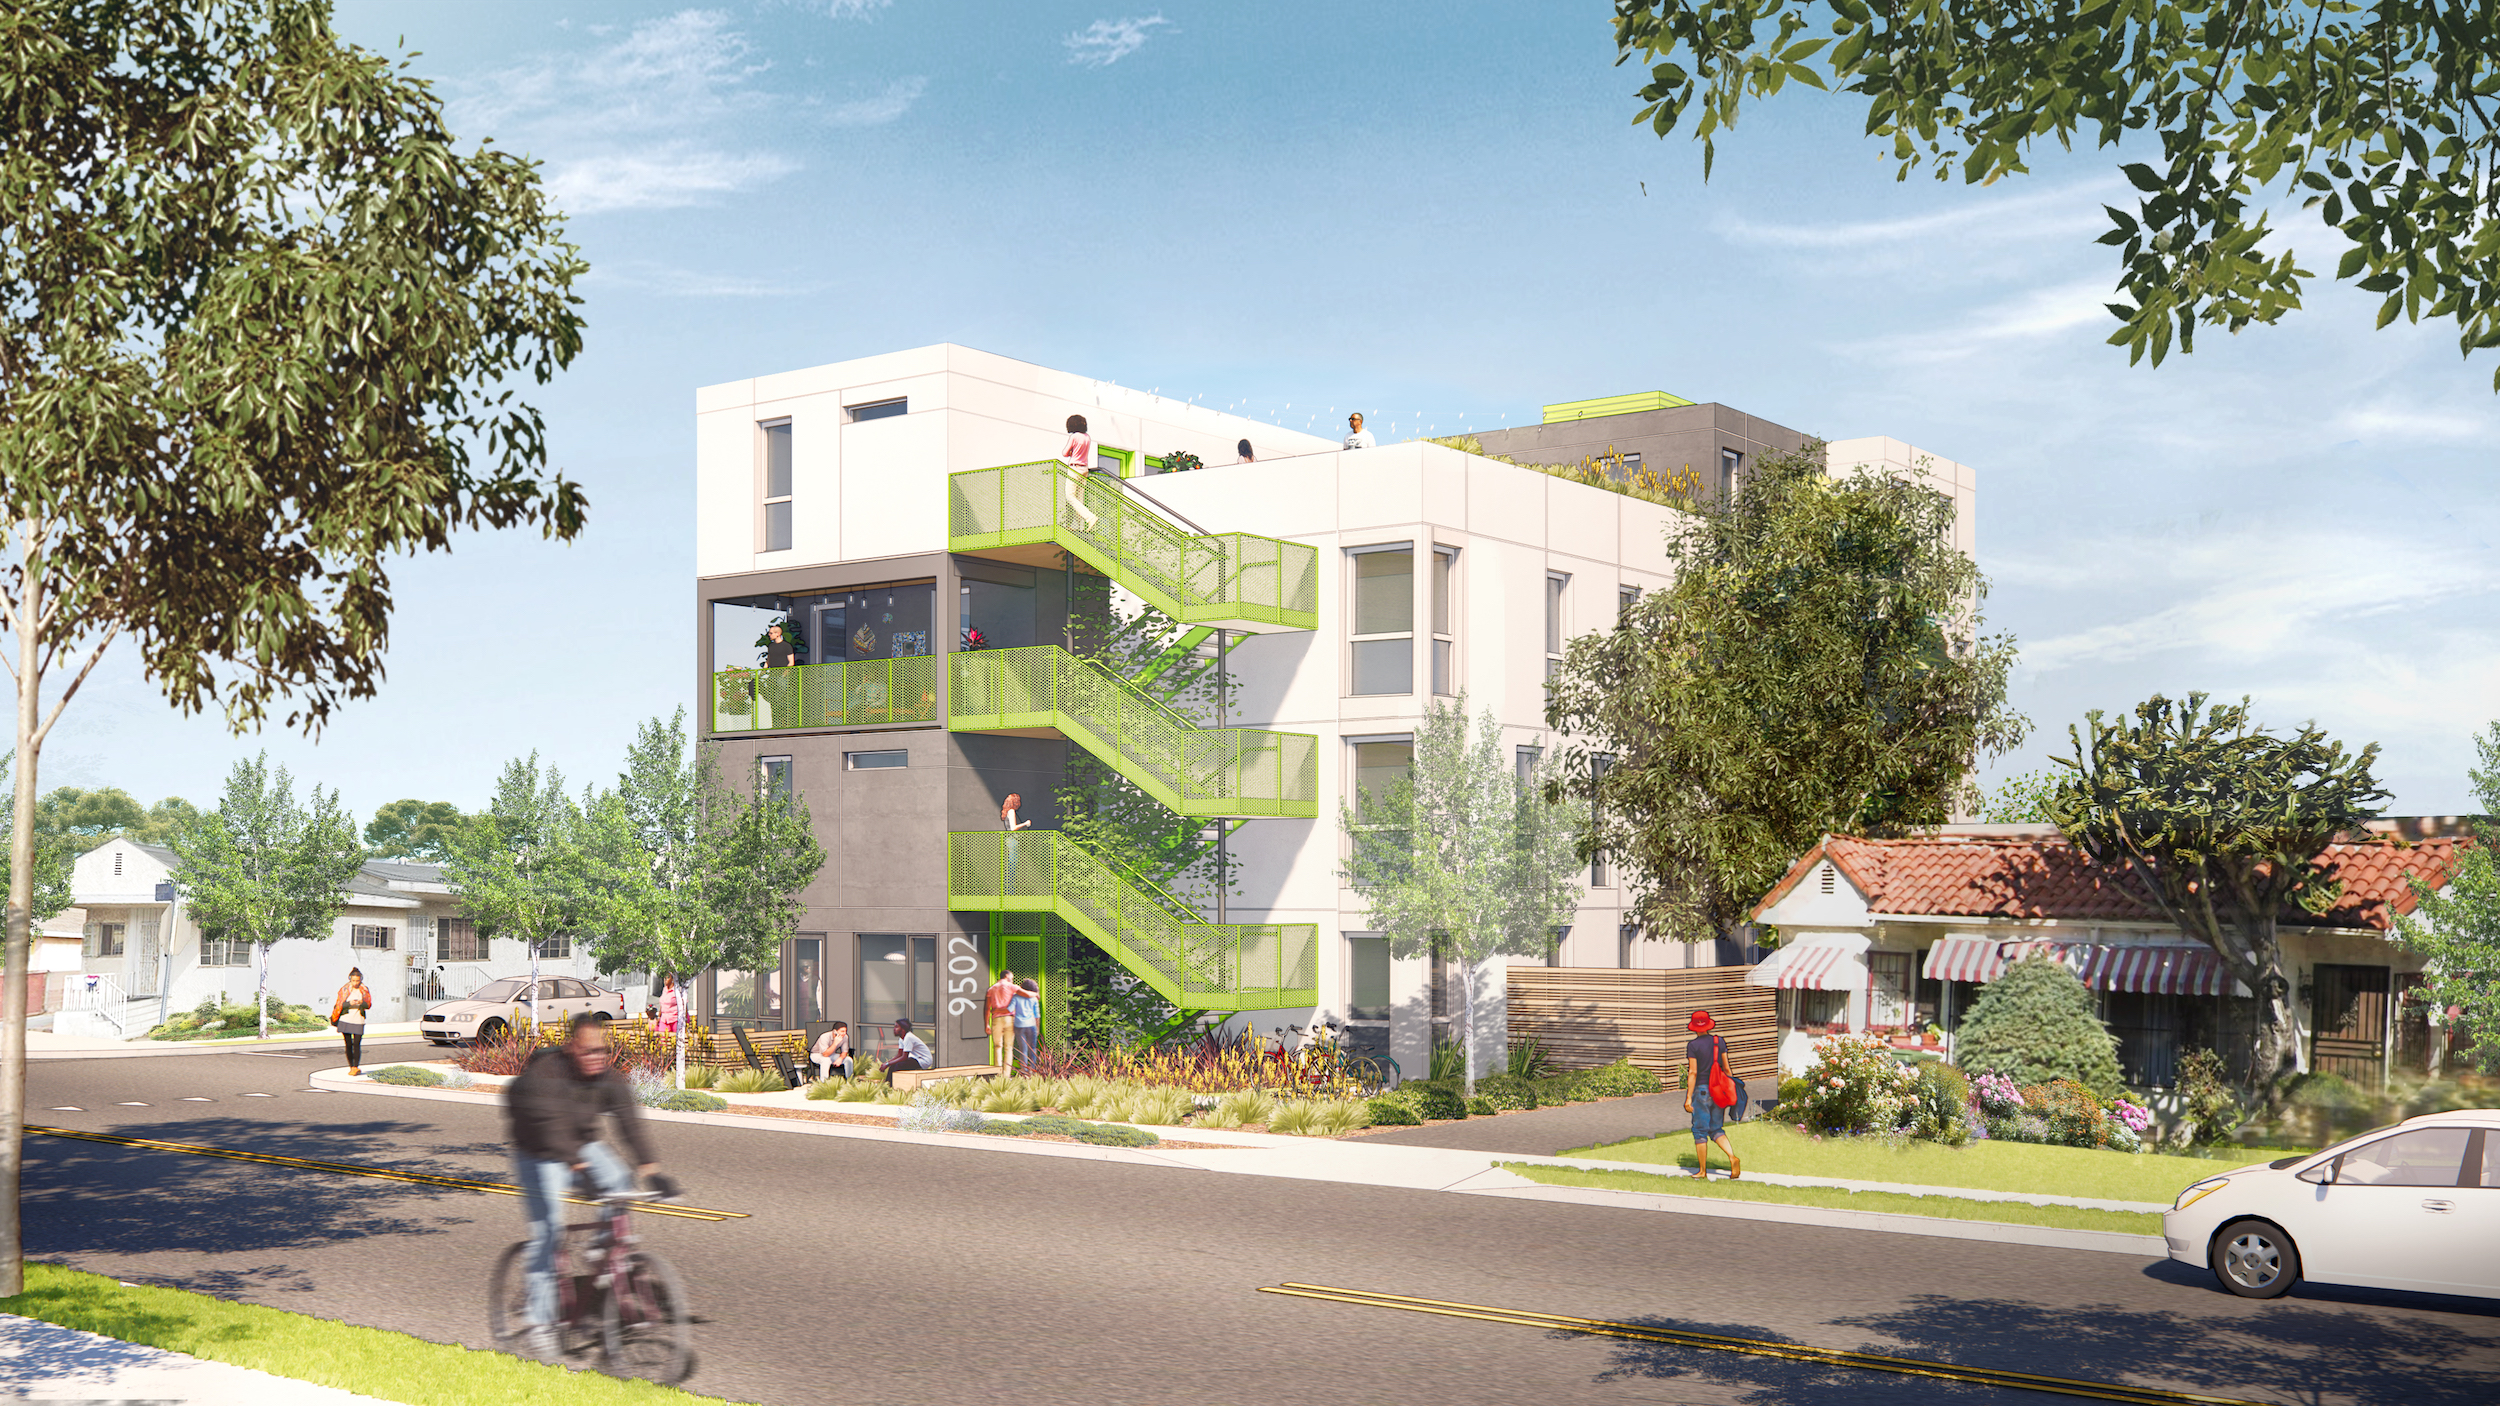 modular transitional housing development rendering